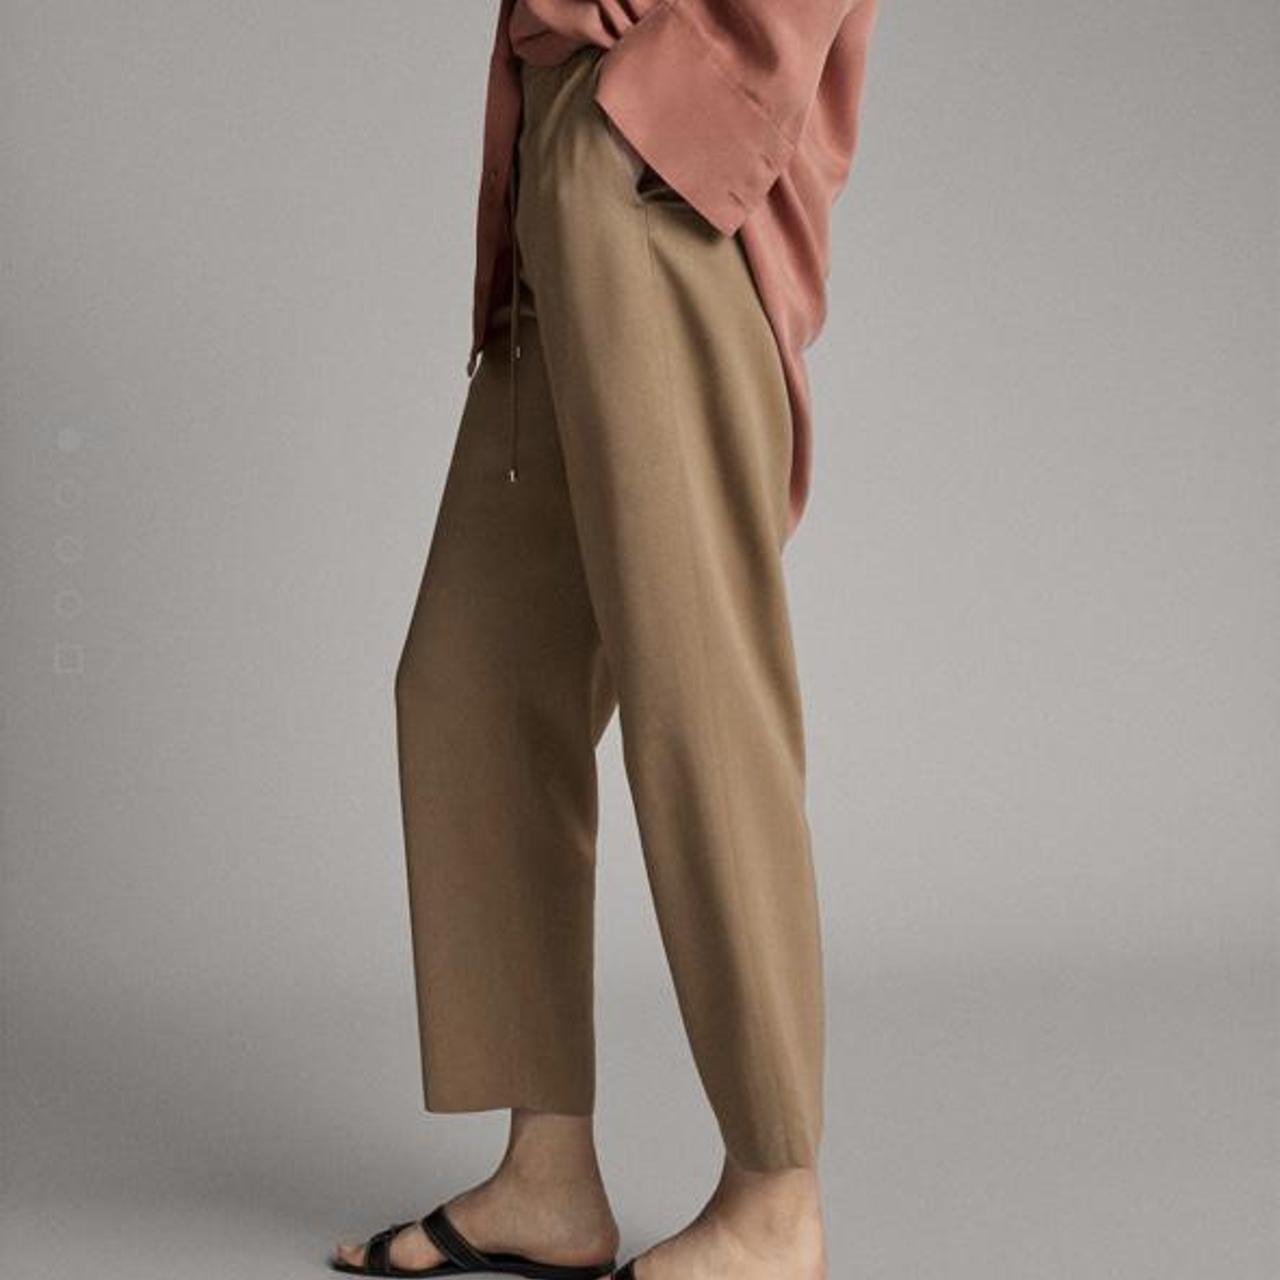 Product Image 1 - Massimo dutti beige pants size